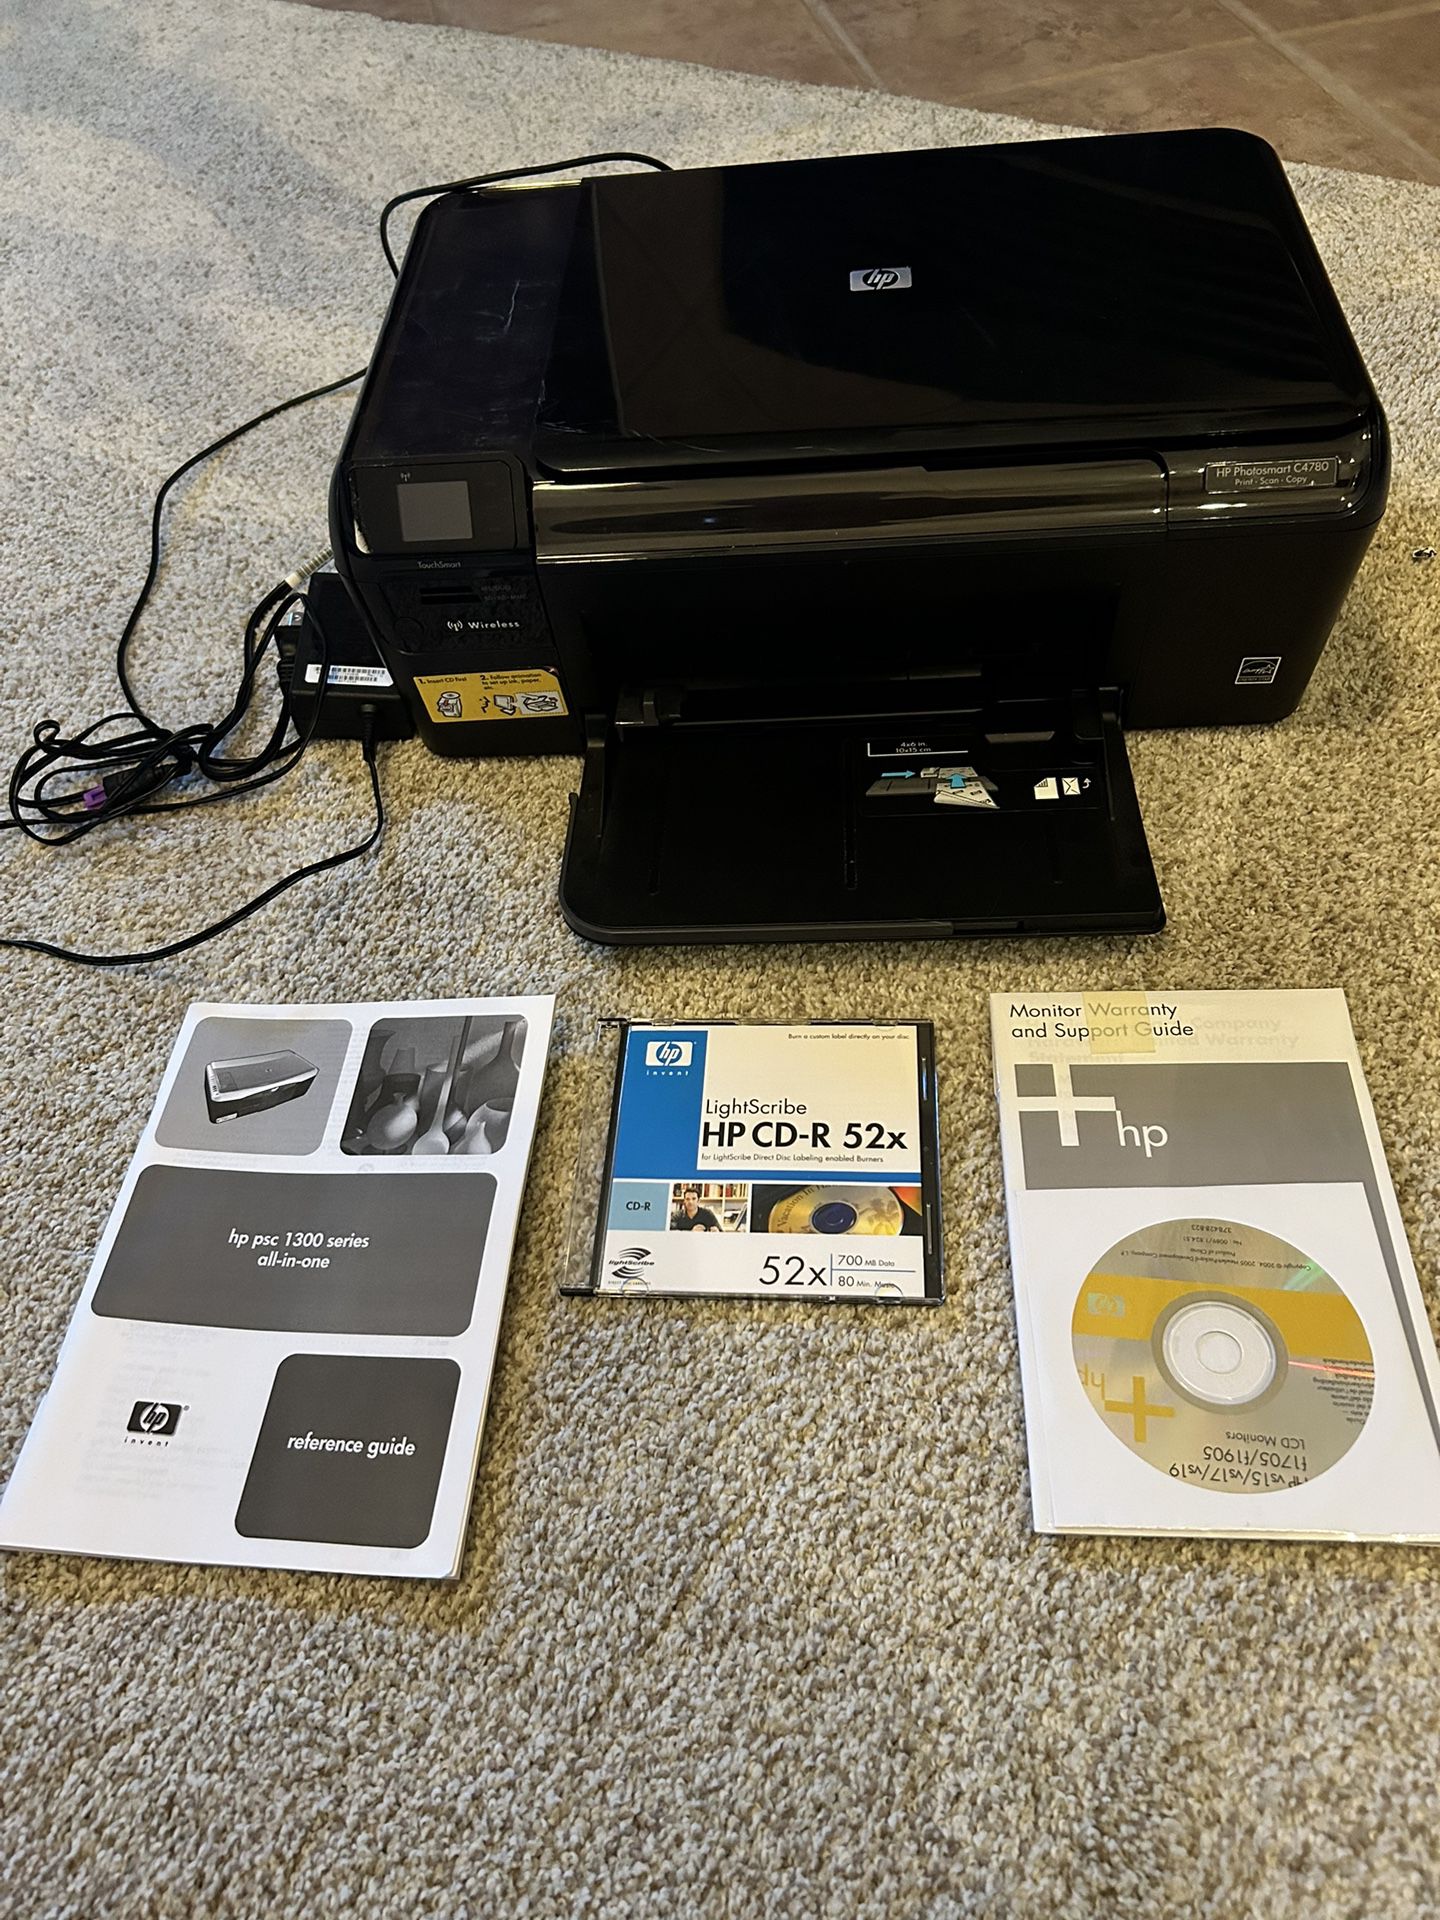 HP Photosmart C4780 All-in-One Printer